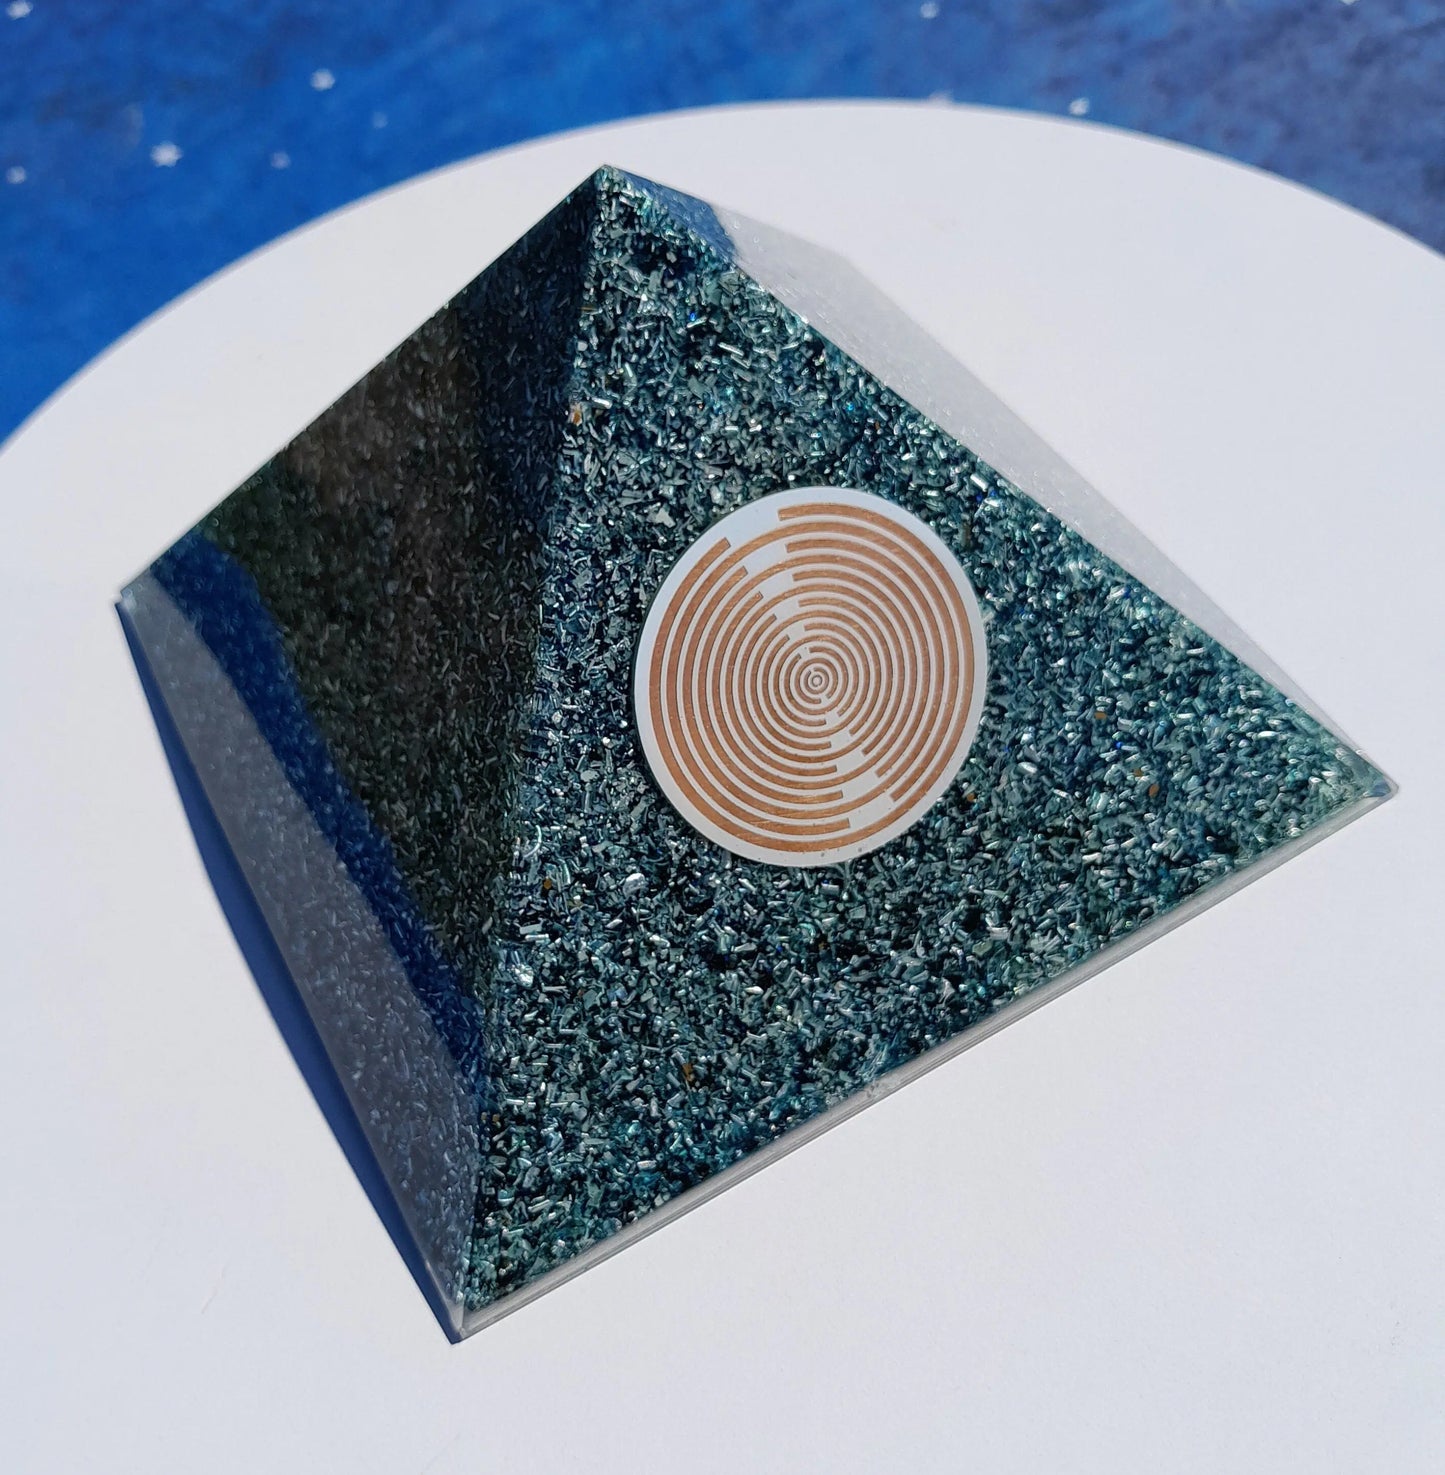 Pirámide Orgonita Lakhovsky MWO- Color Azul- 140mm de Base - mundoorgon